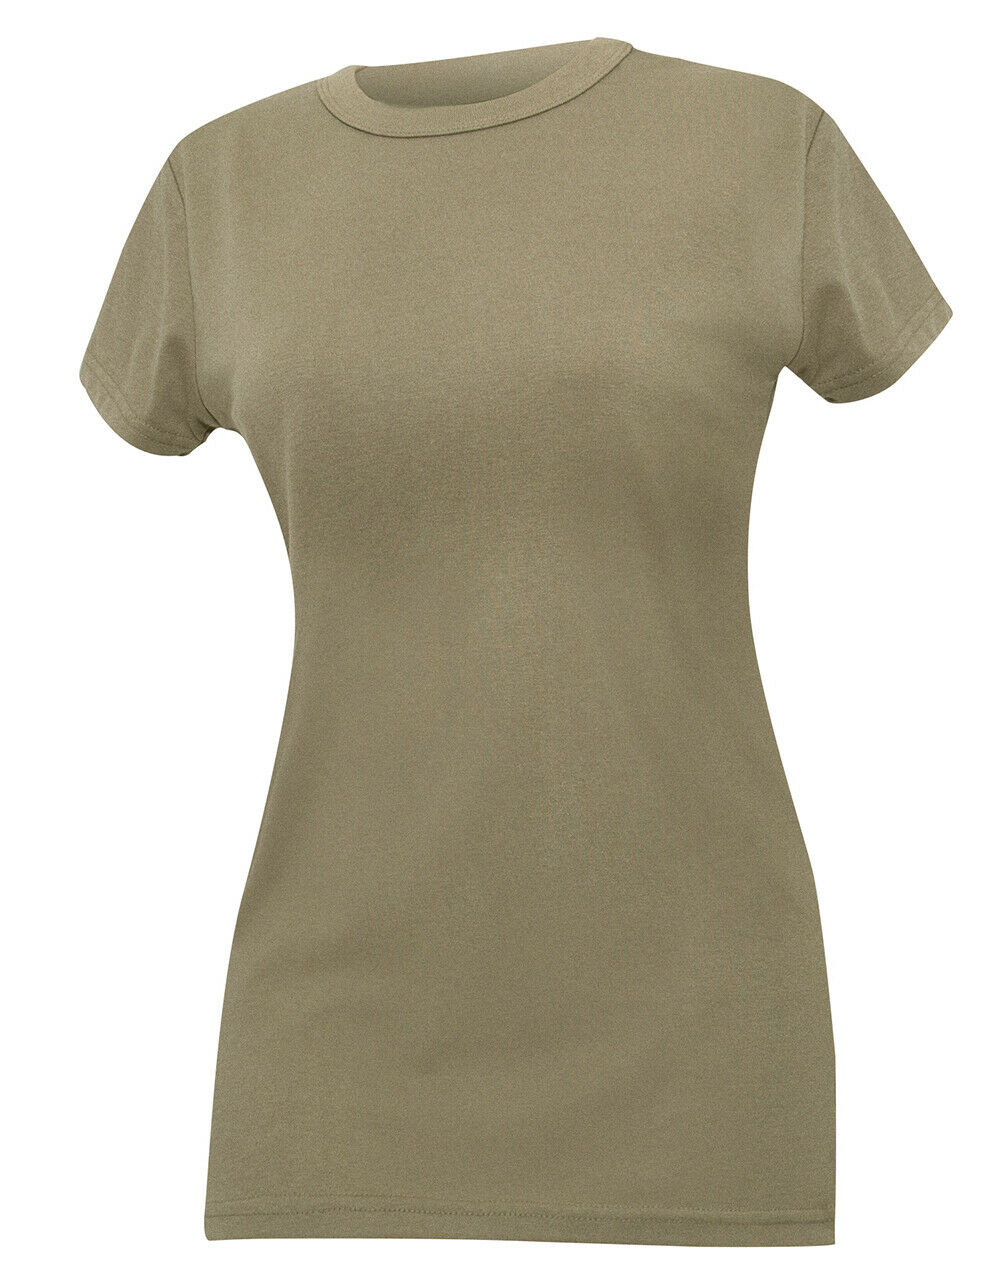 Rothco Womens Longer T-shirt - Coyote Brown